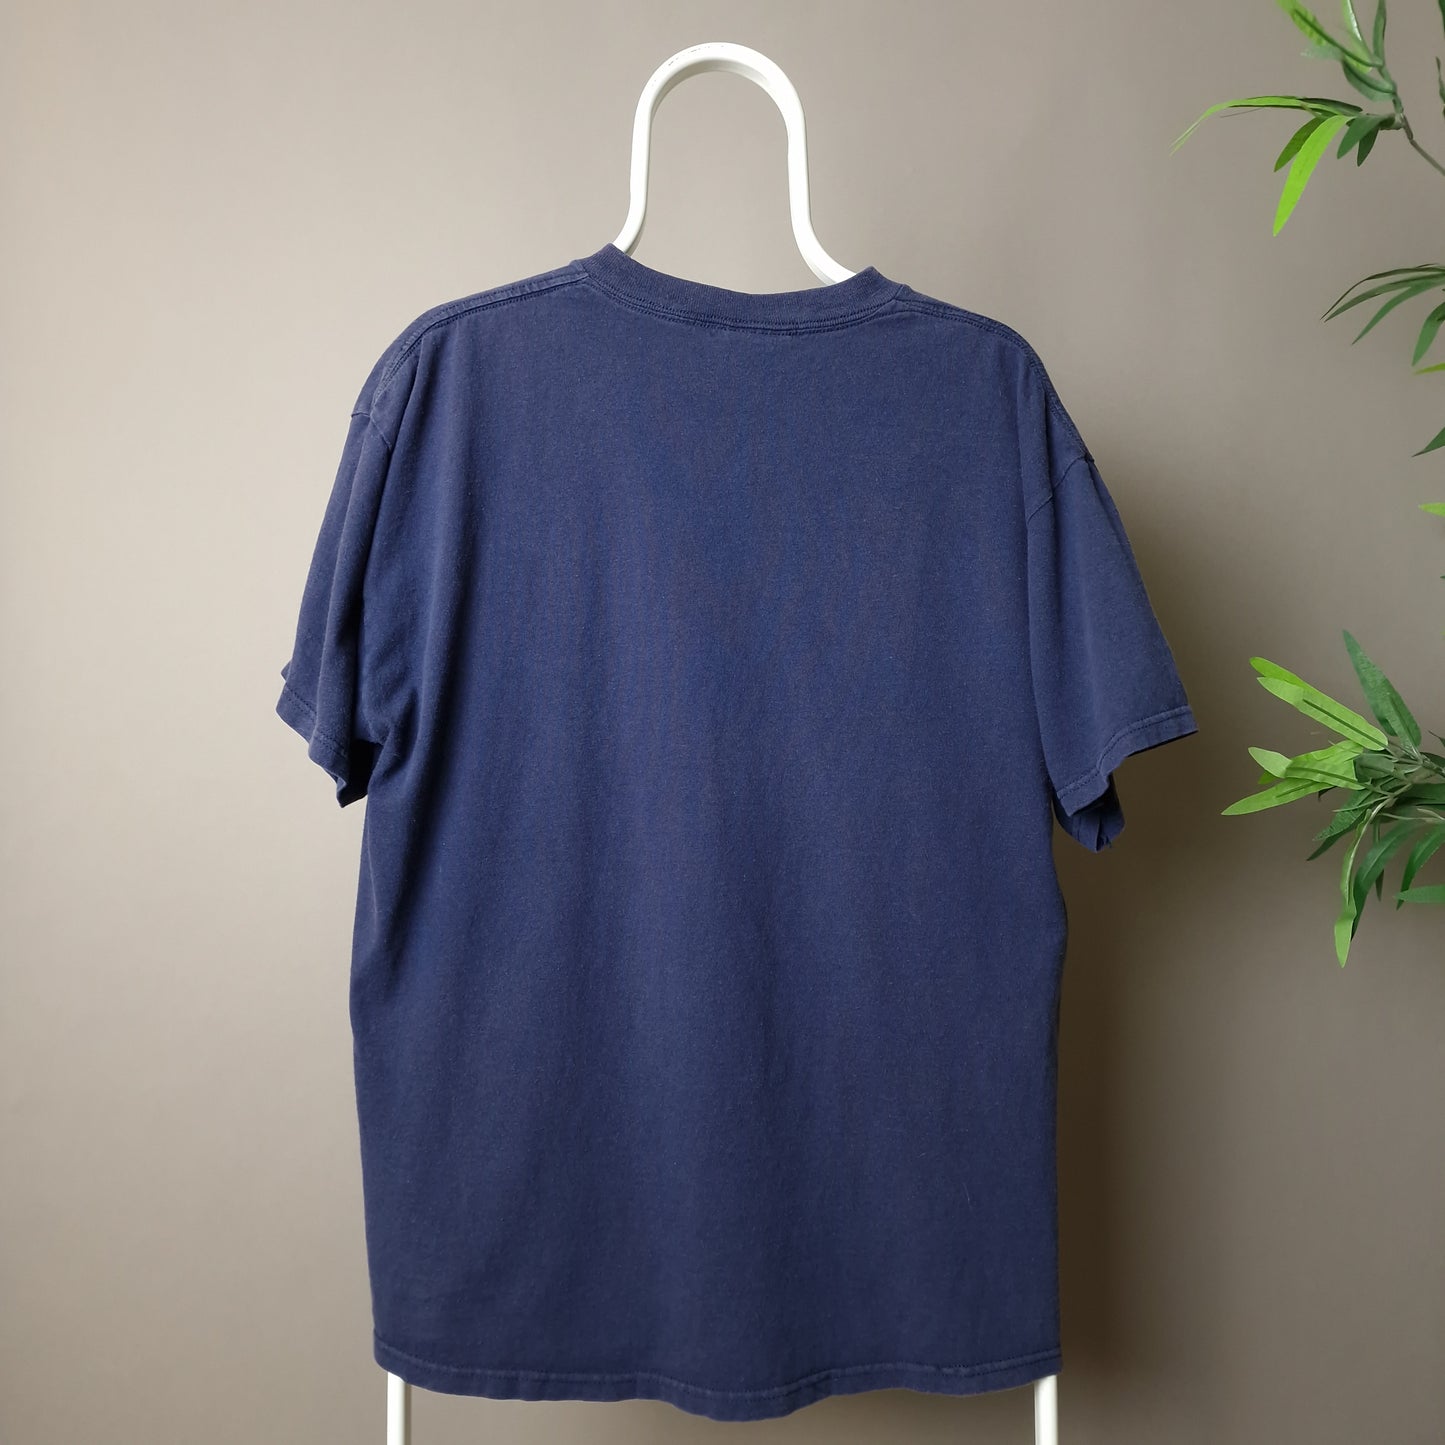 Vintage Nike t-shirt in blue - medium